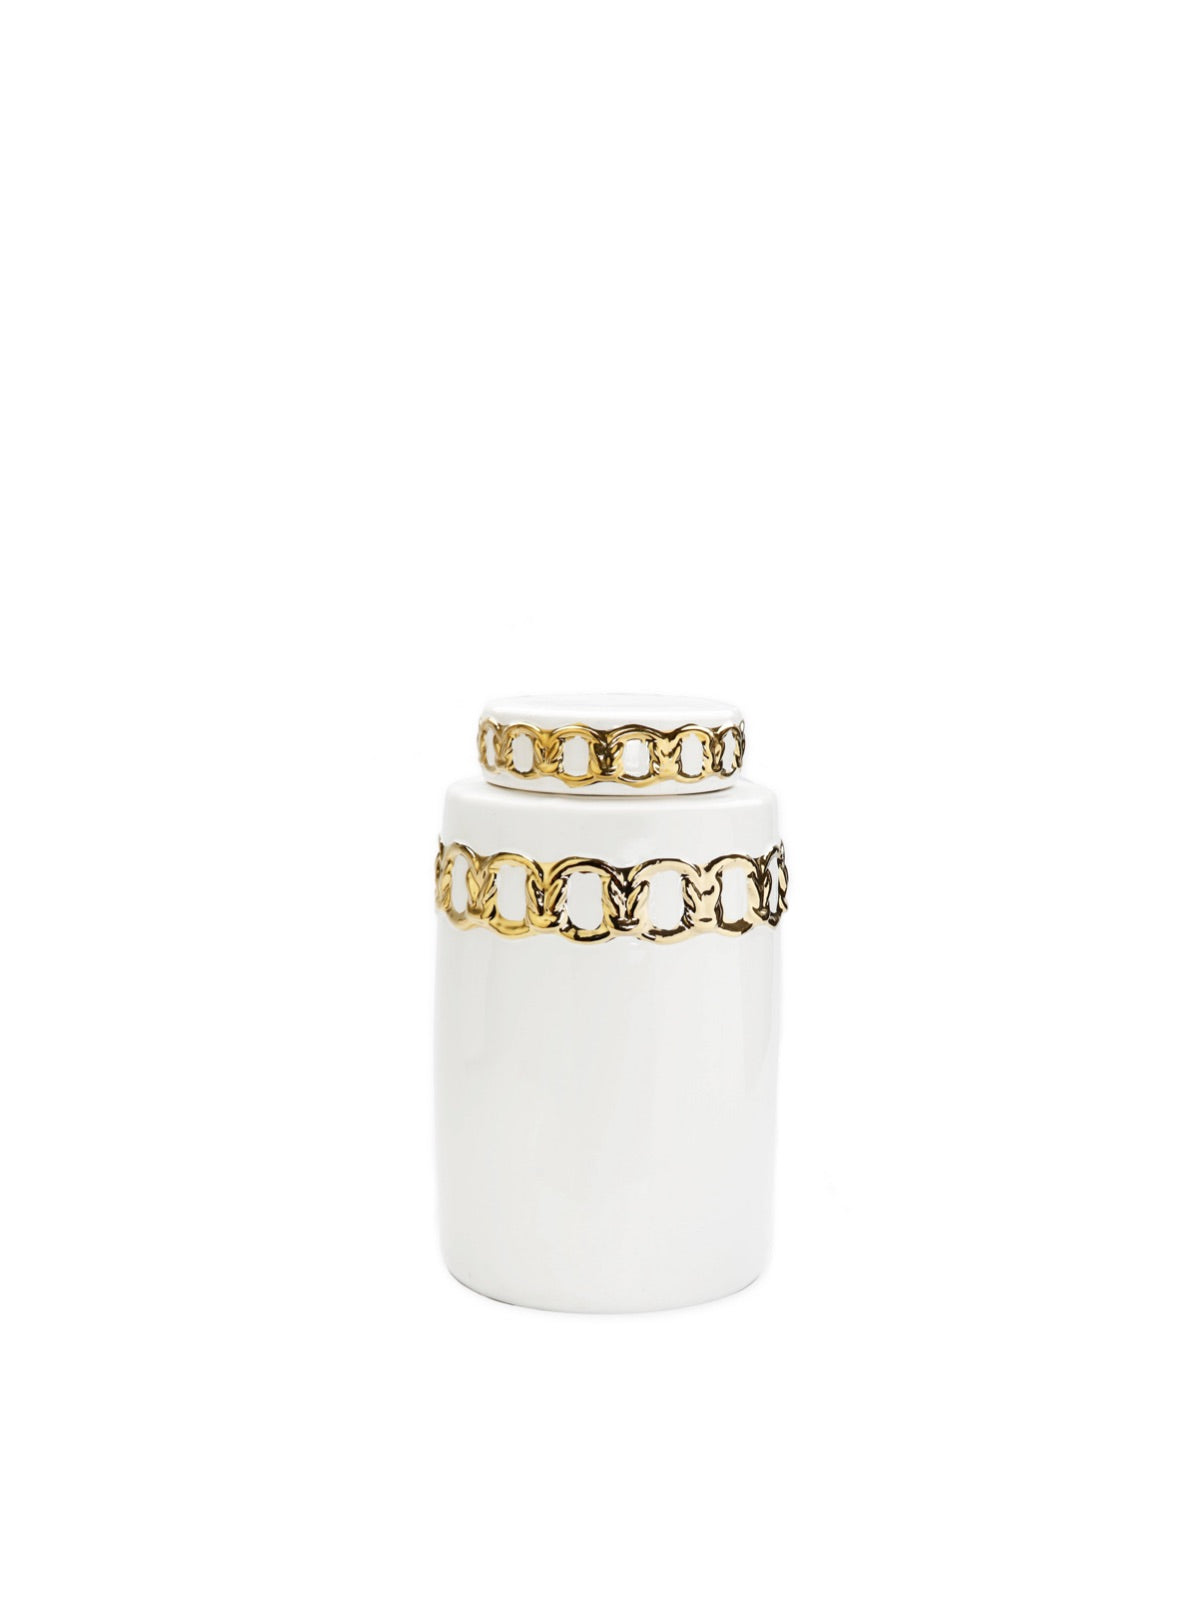 Small White Ceramic Kitchen Jar with Luxury Gold Chain Details - KYA Home Decor